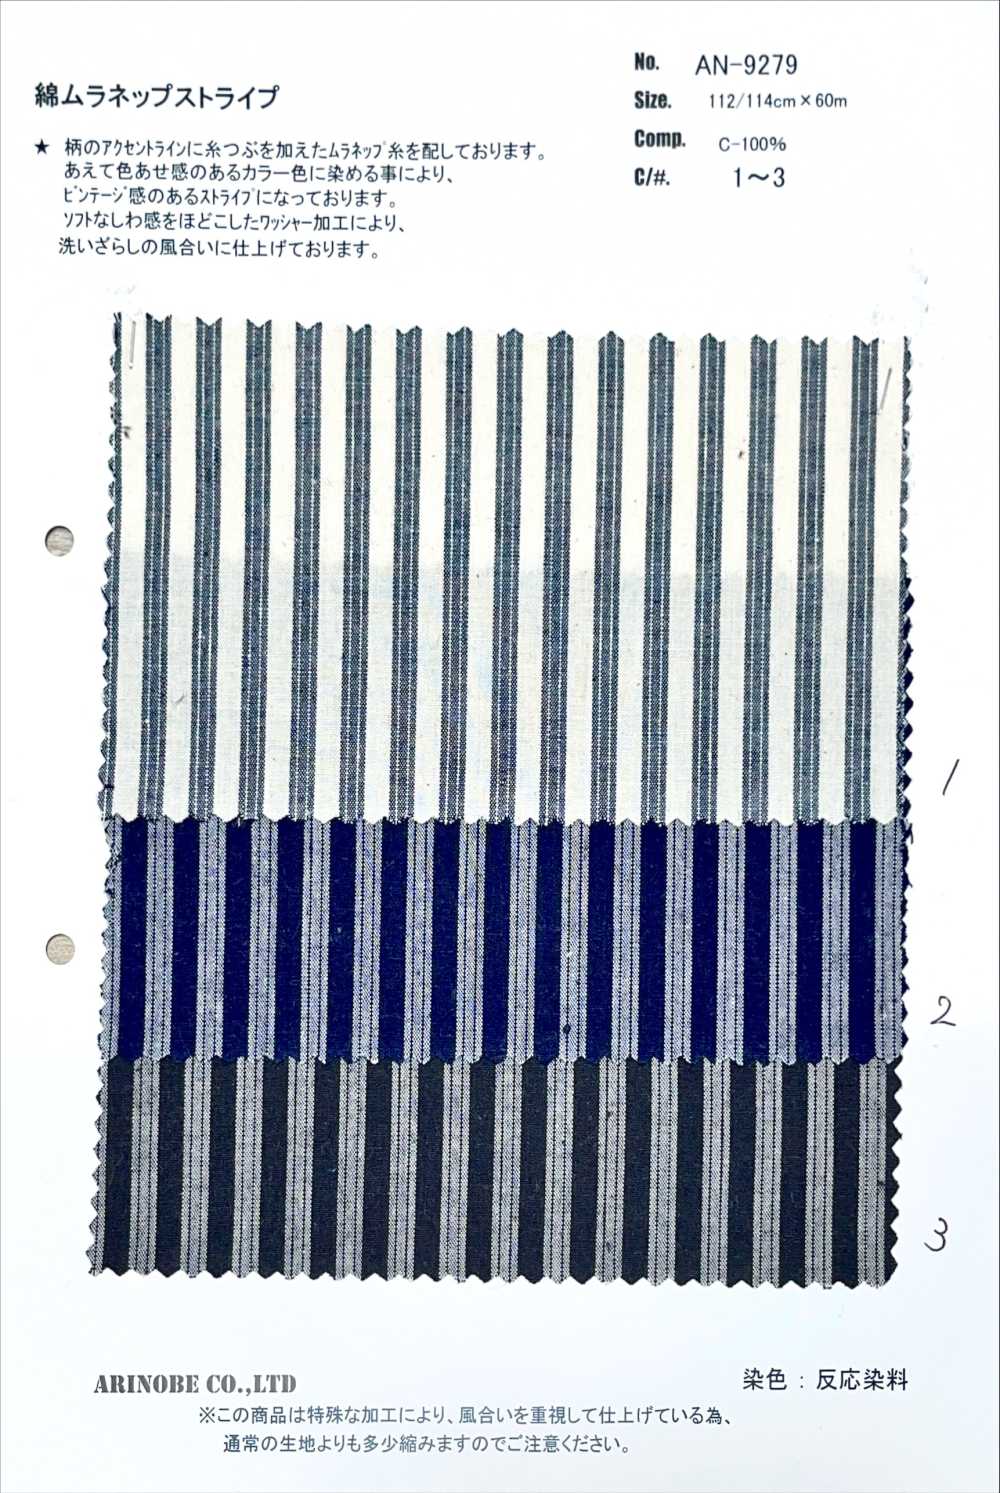 AN-9279 Cotton Muranep Stripe[Textile / Fabric] ARINOBE CO., LTD.